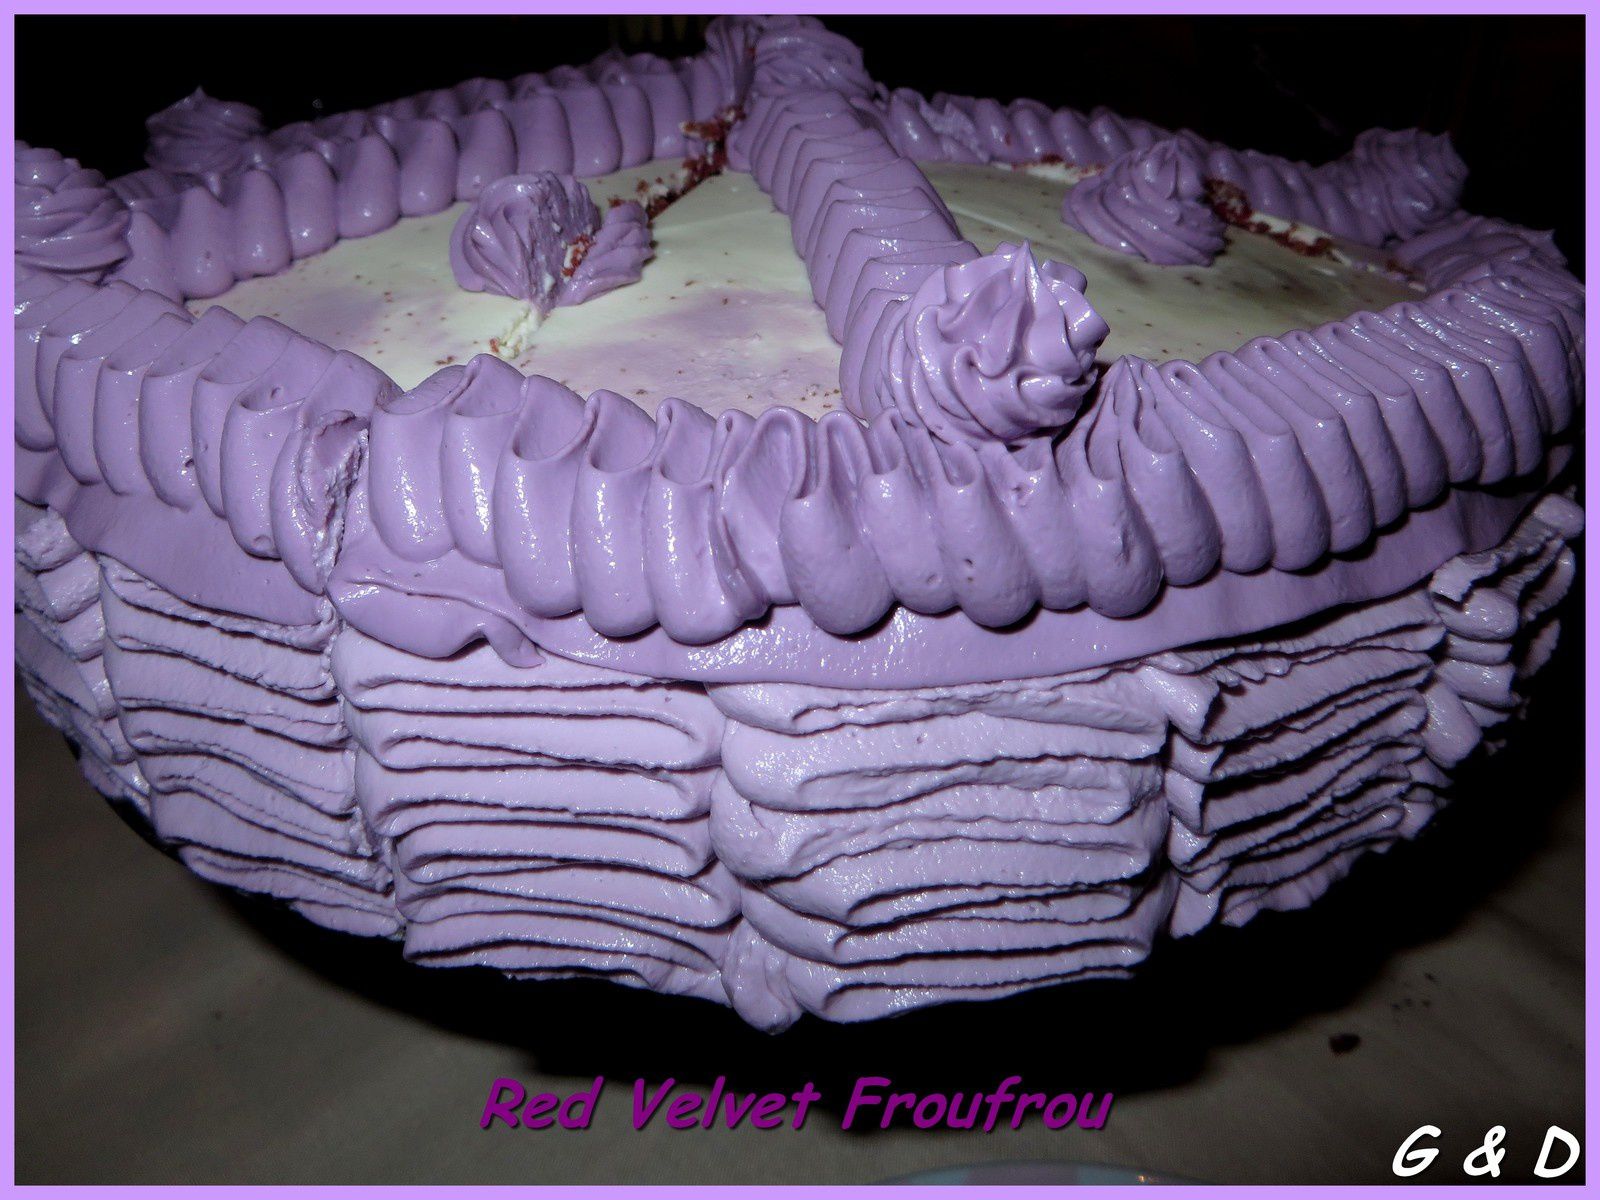 Pimp my cake : Red Velvet Layer Ruffle cake (Gâteau froufrou)